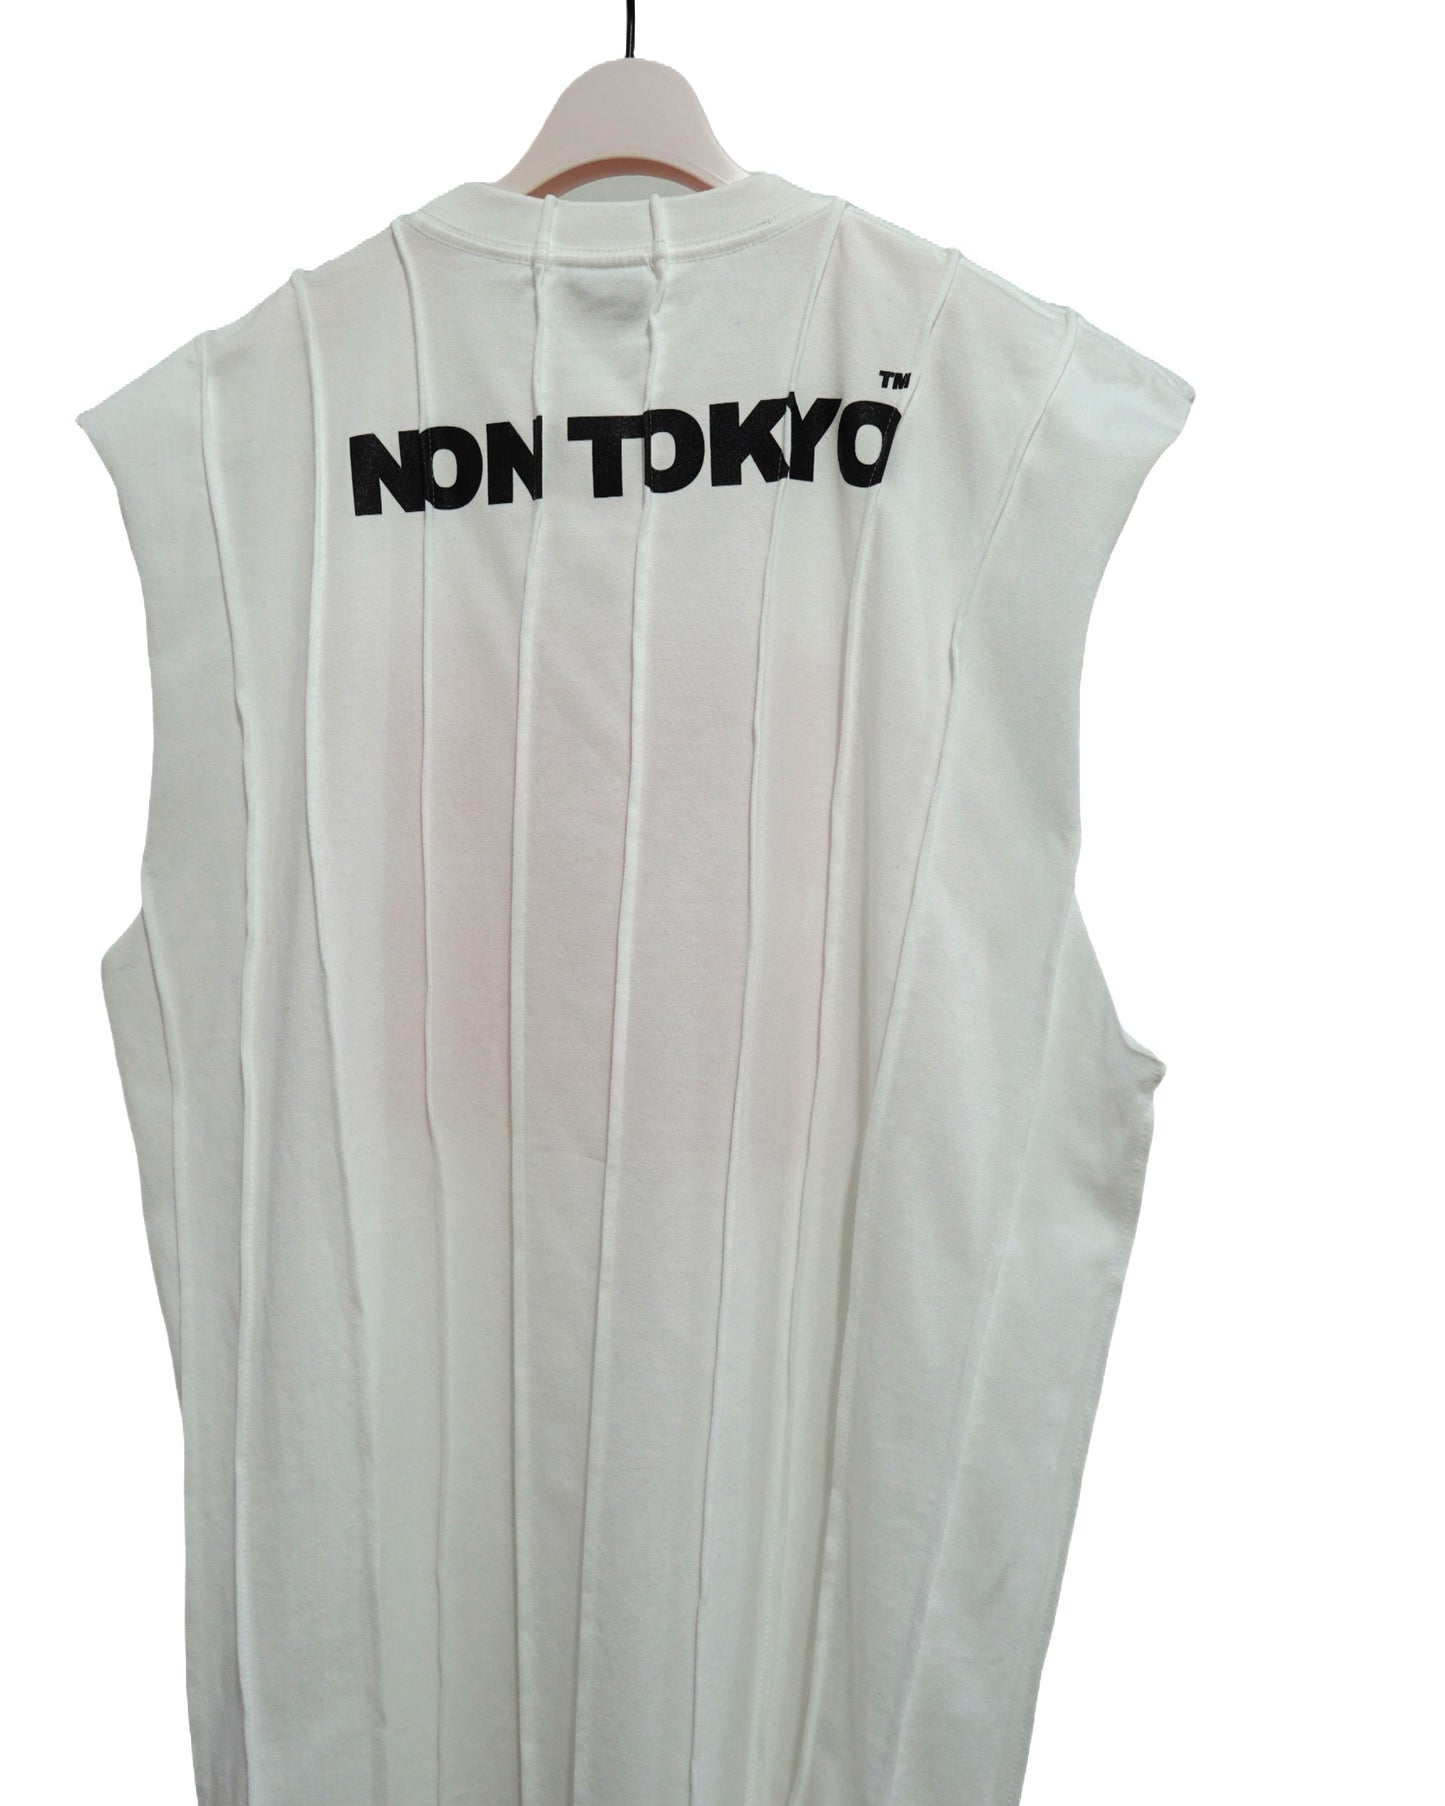 NON TOKYO /  PIN TUCK C/S (BASKETBALL / WHITE) / 〈ノントーキョー〉ピンタックカットソー (バスケットボール / ホワイト)